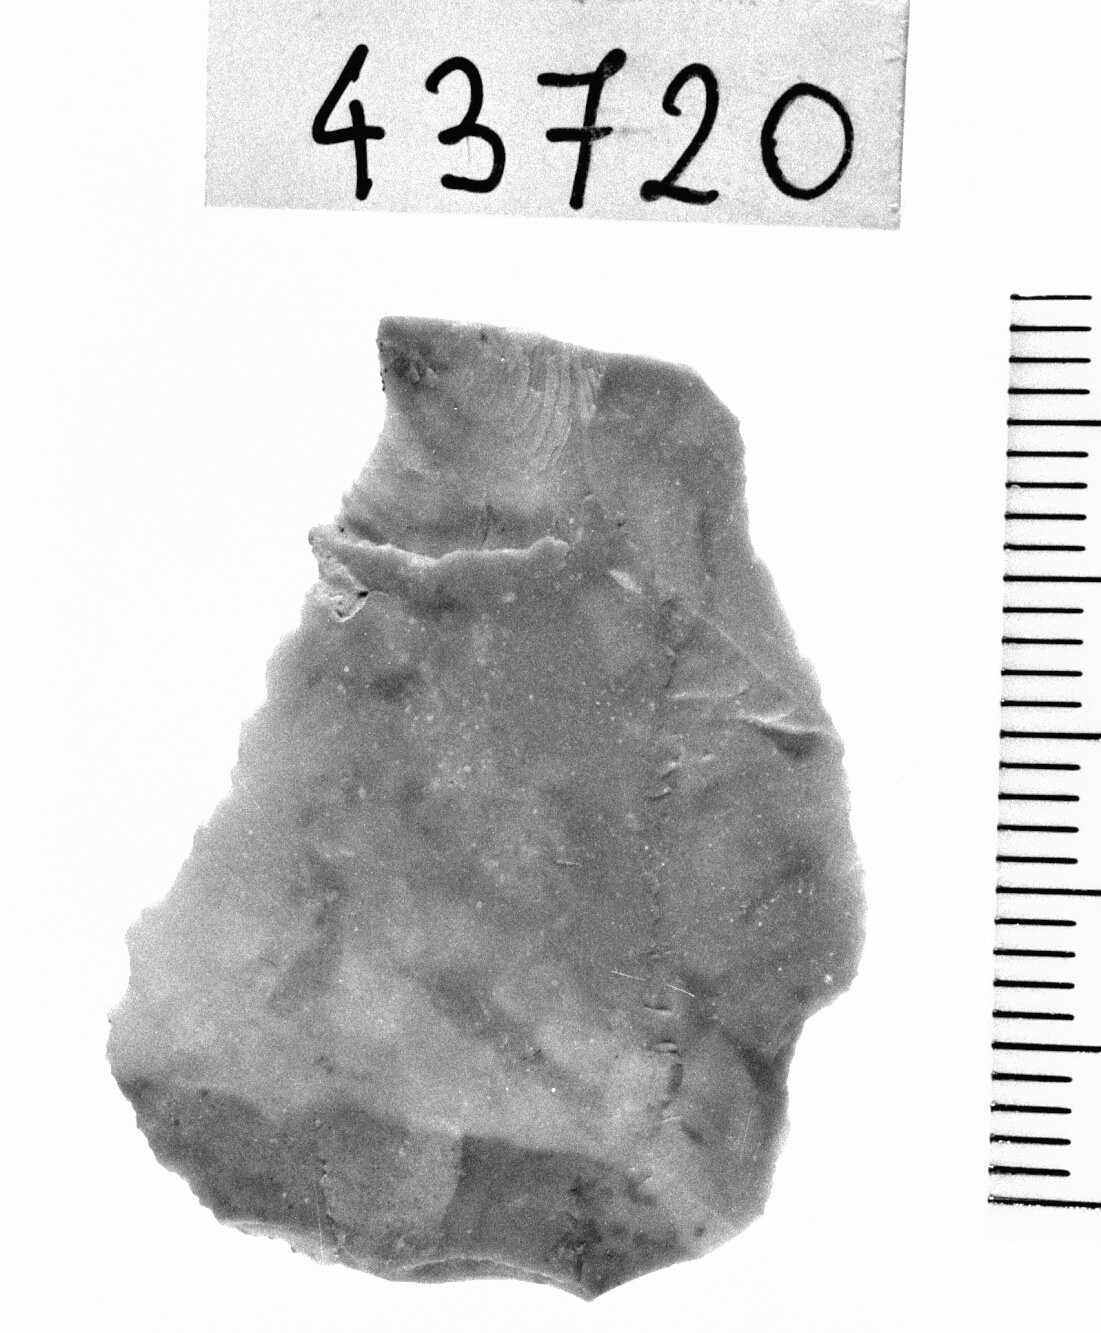 troncatura marginale rettilinea - Epigravettiano (Paleolitico superiore)